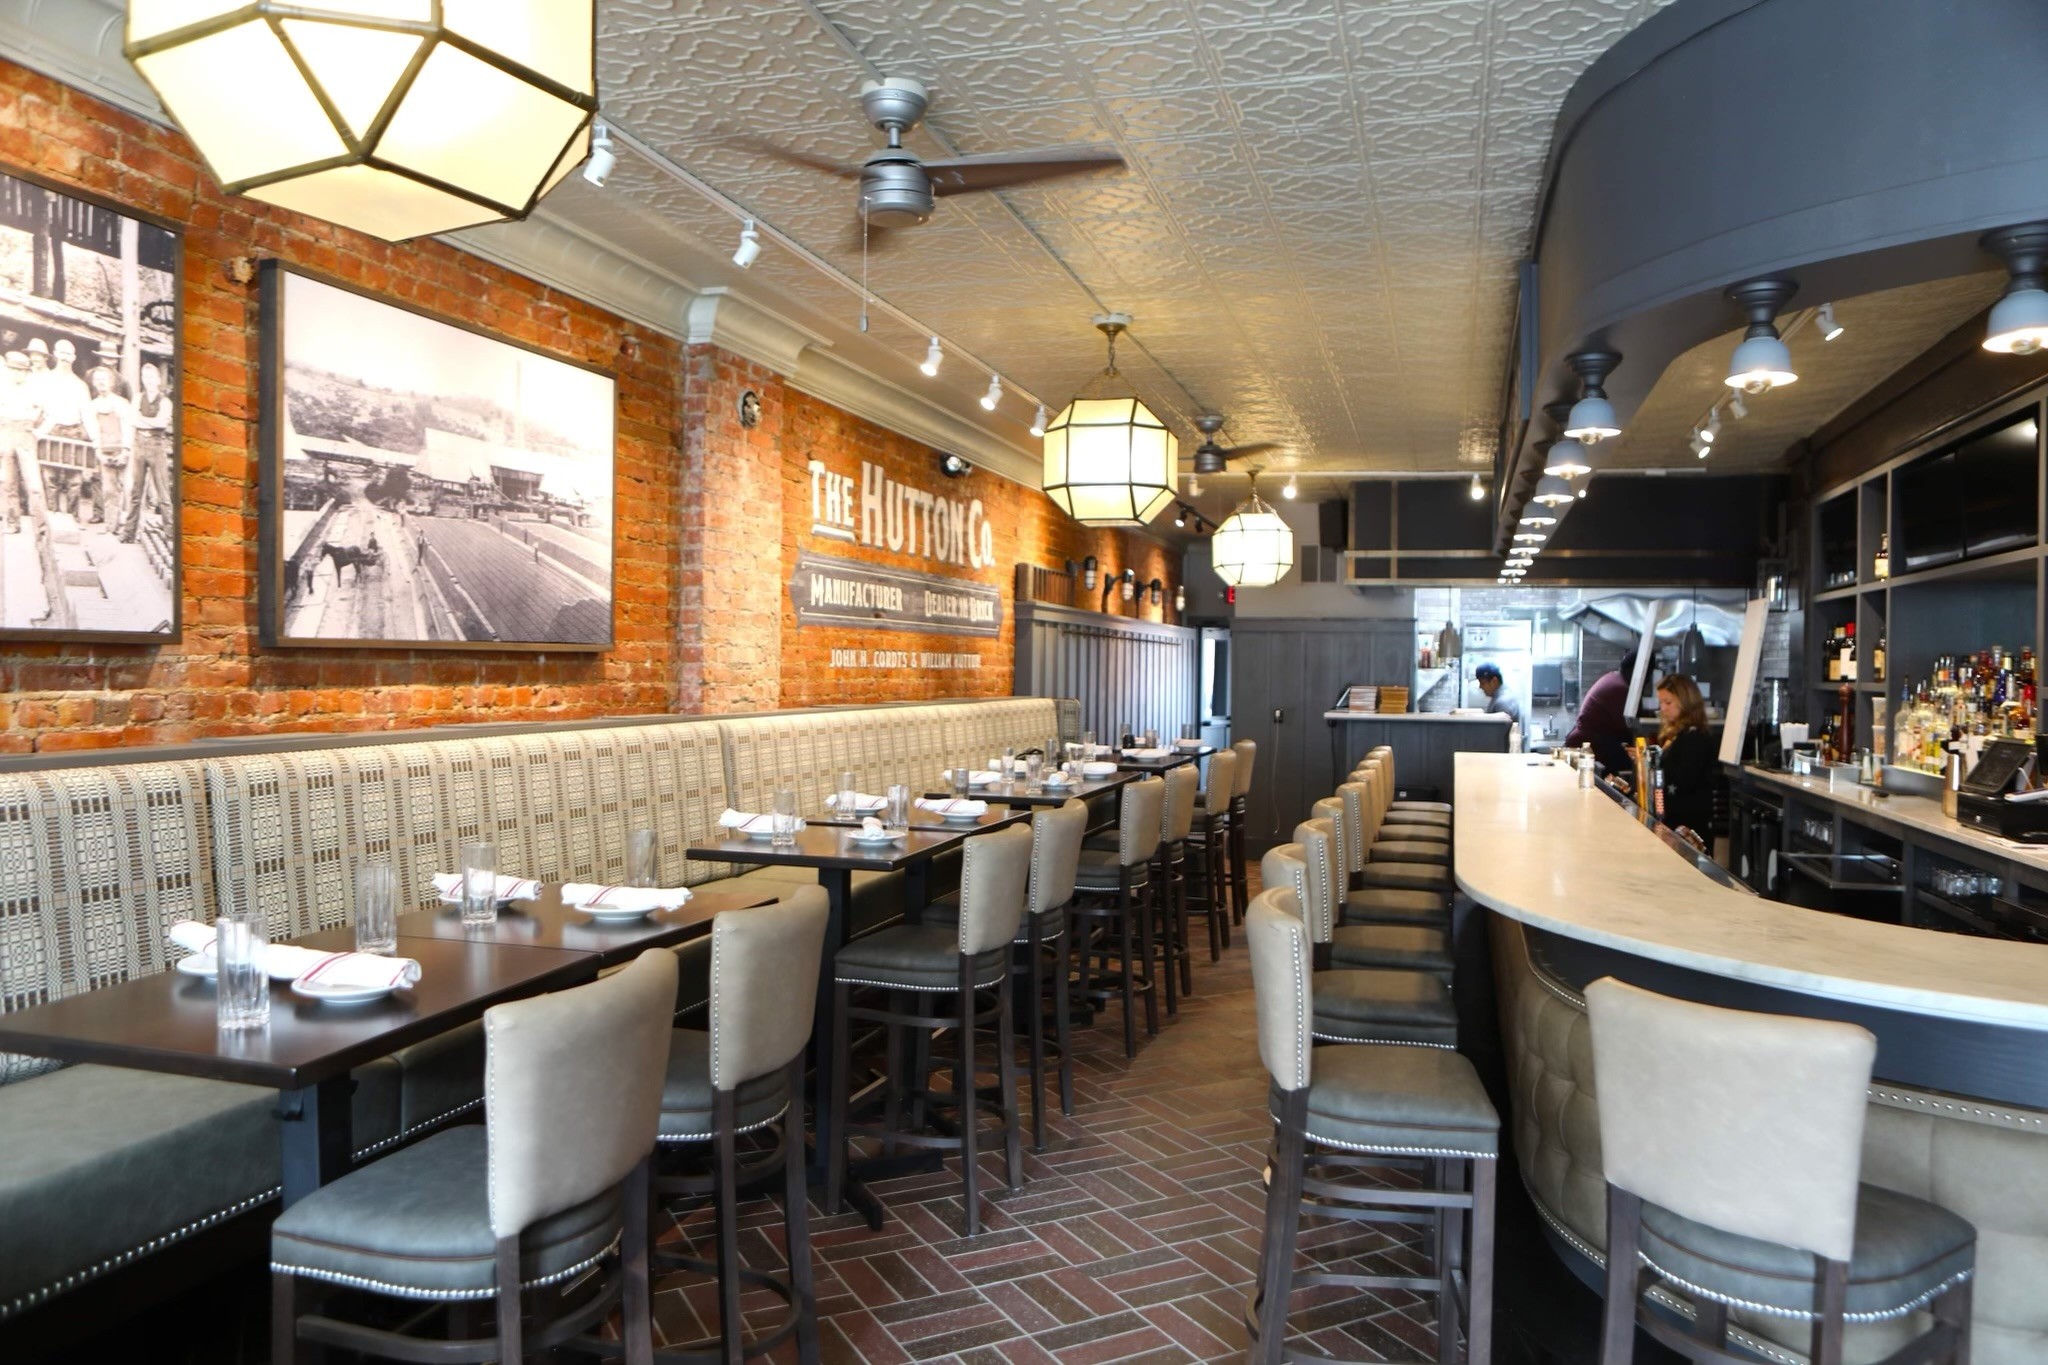 The Patio 3 Mexican Restaurant and Bar - Mount Kisco, NY